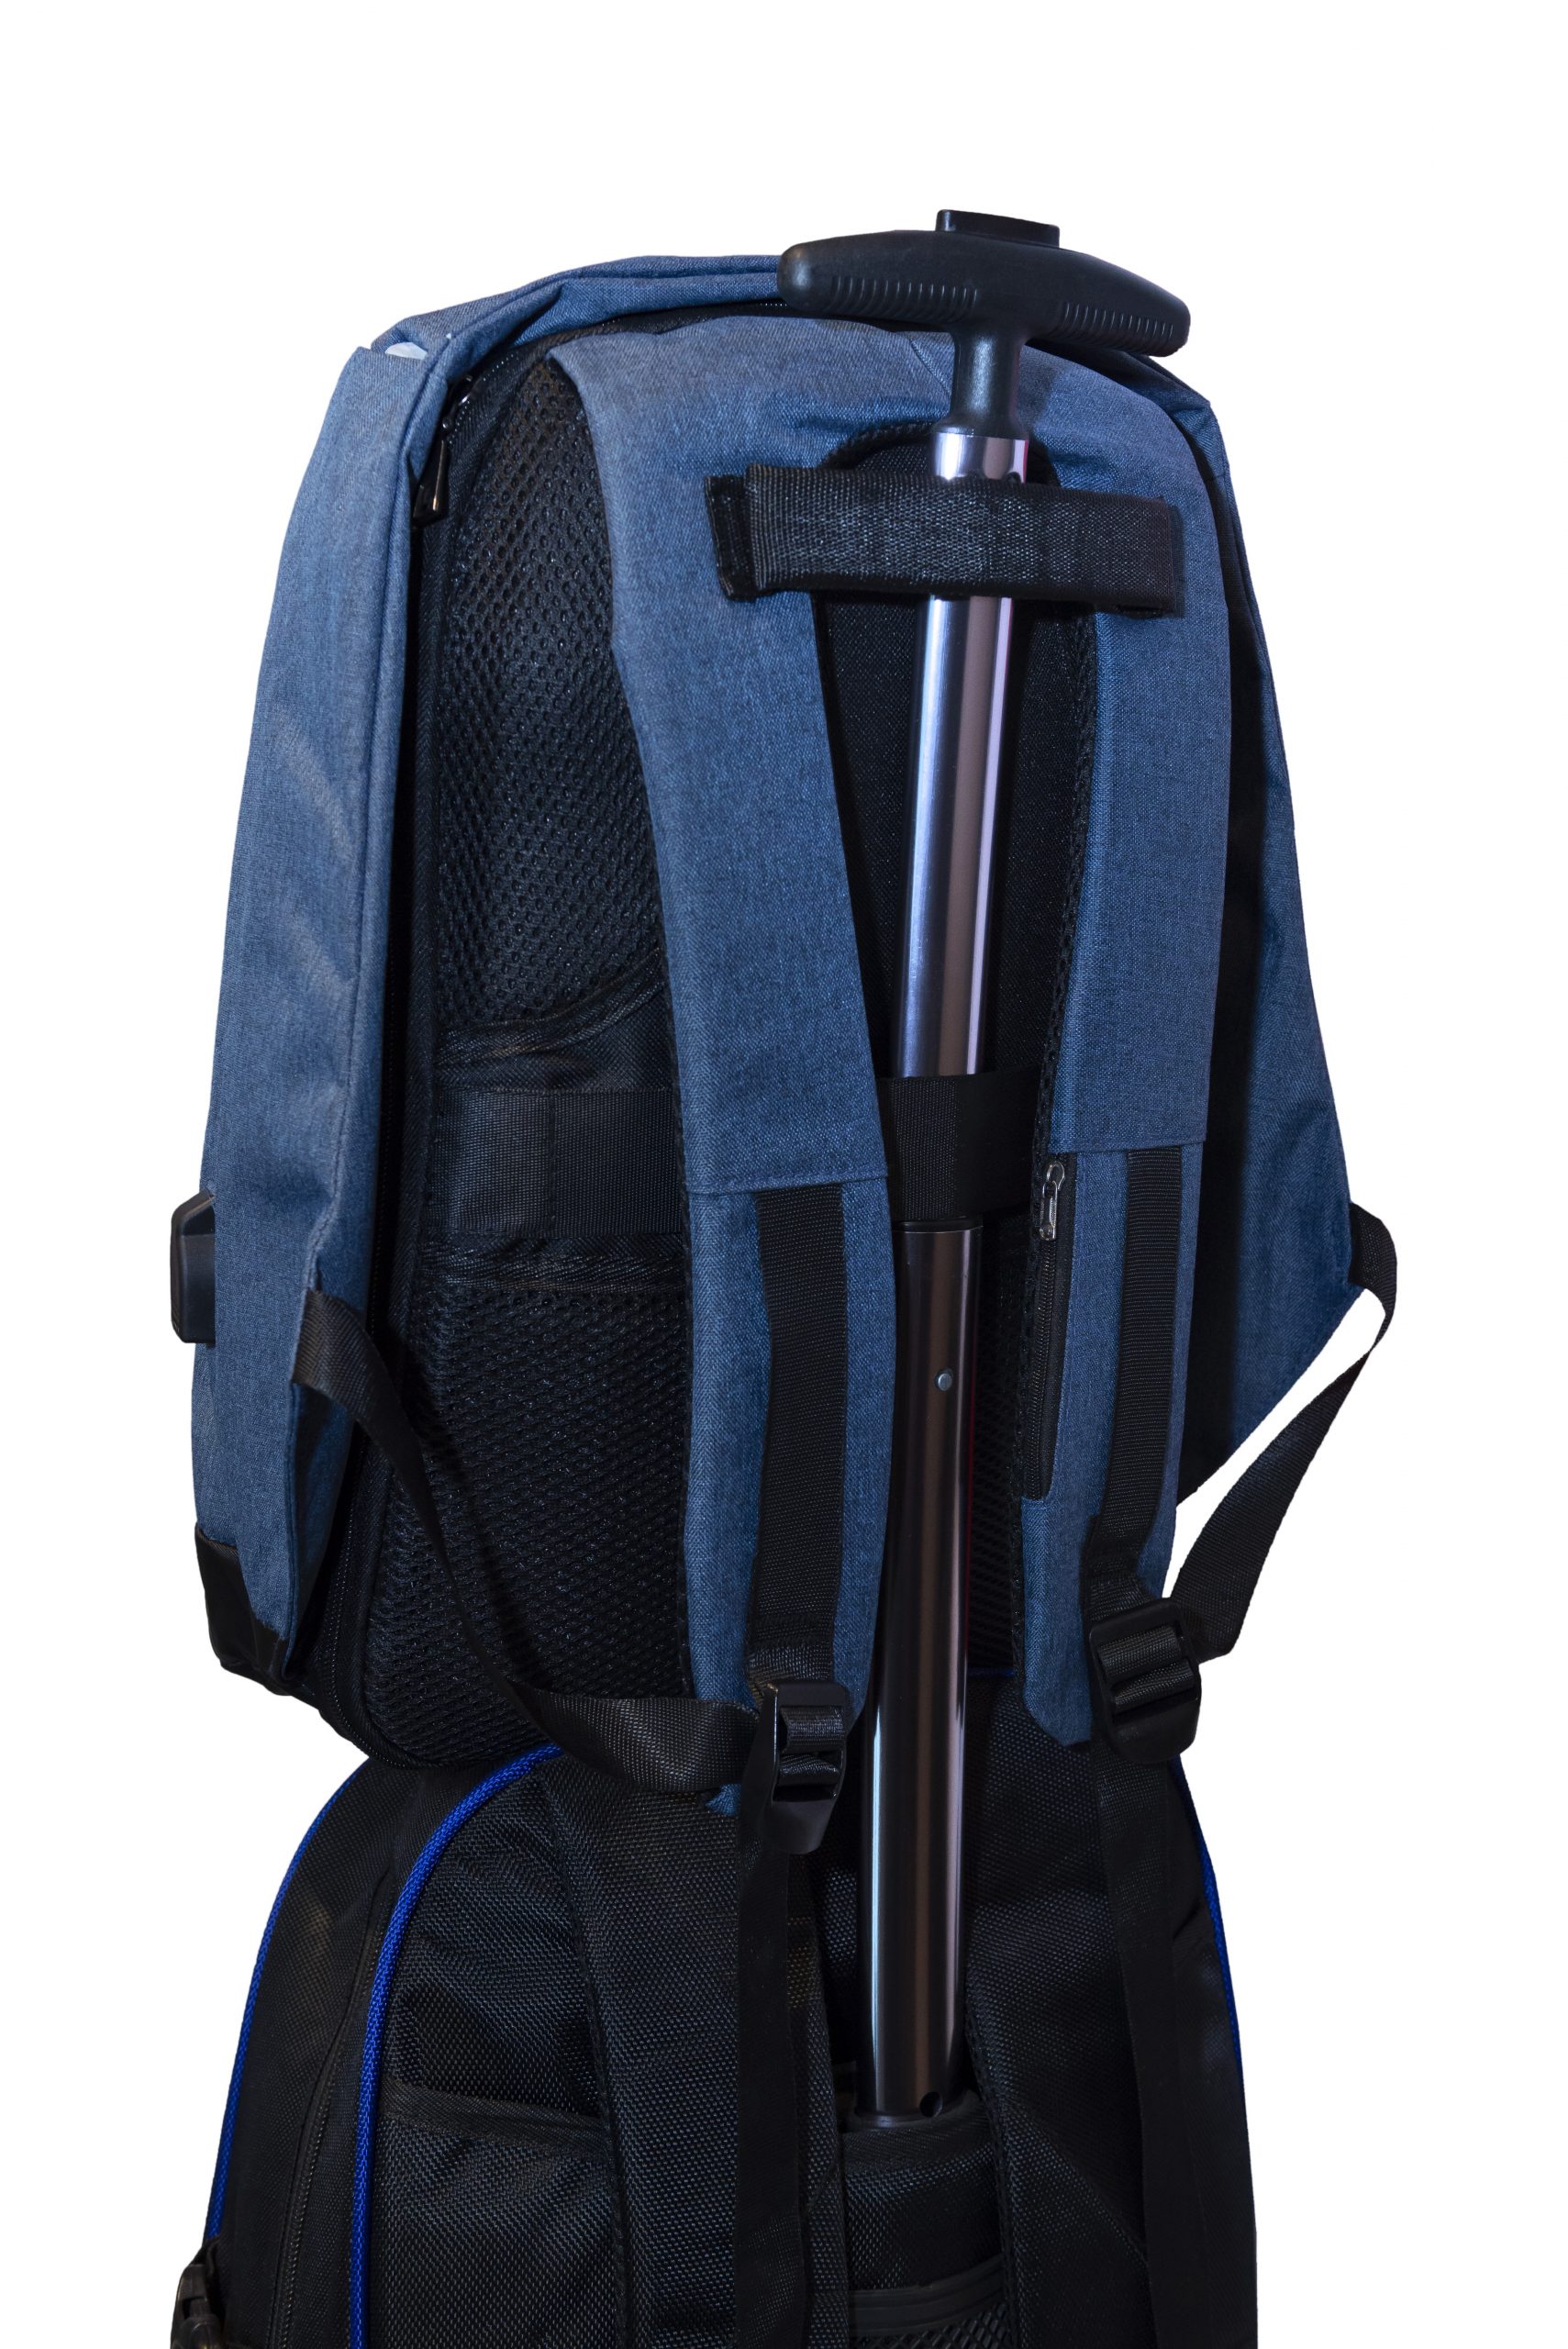 custom backpack luggage slot